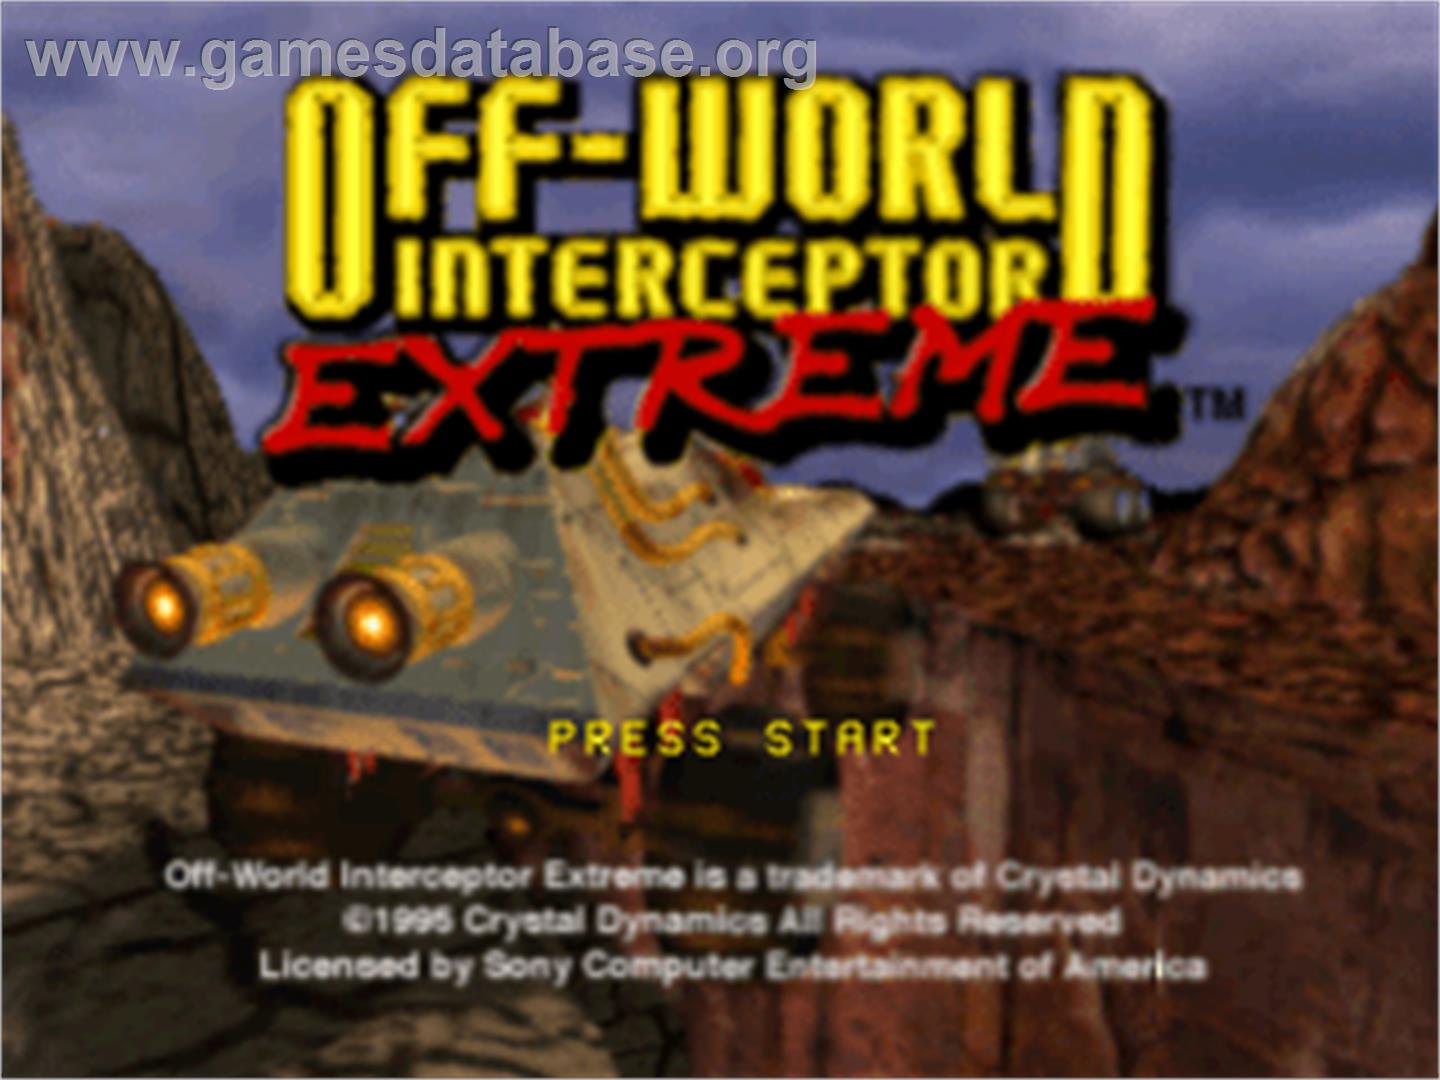 Off-World Interceptor Extreme - Sony Playstation - Artwork - Title Screen